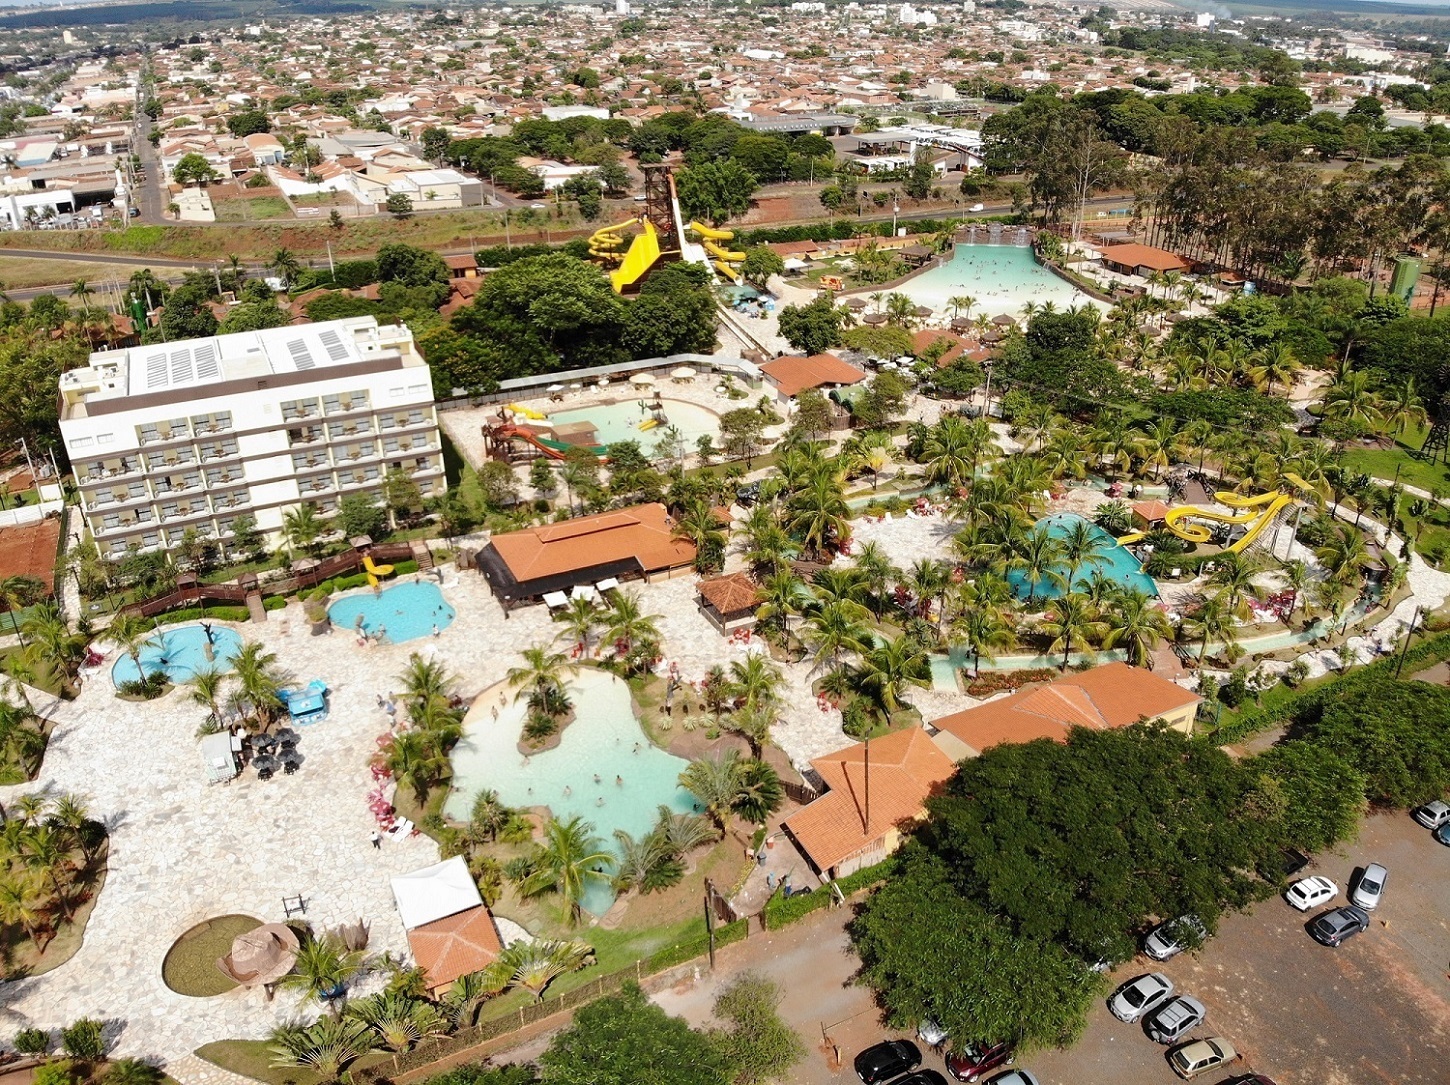 Barretos Country Thermas Resort